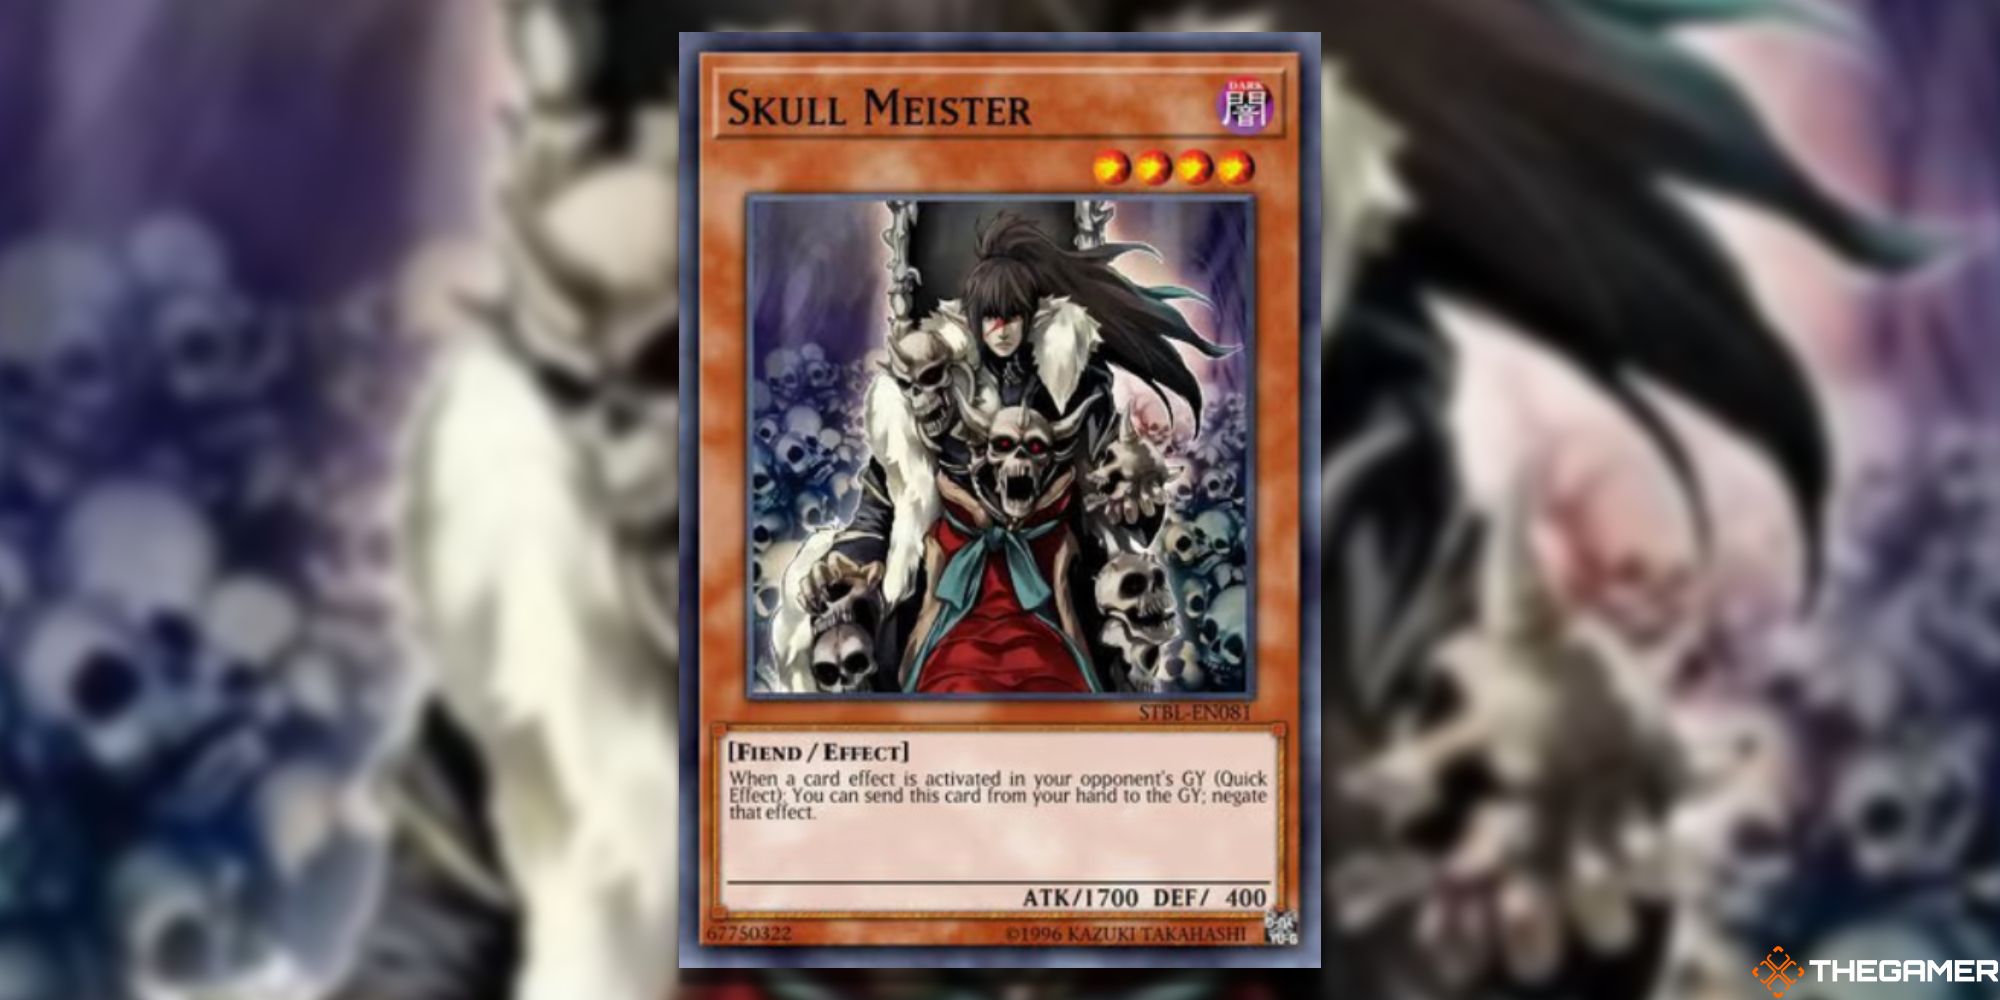 Yu-Gi-Oh! Skull Meister on blurred background